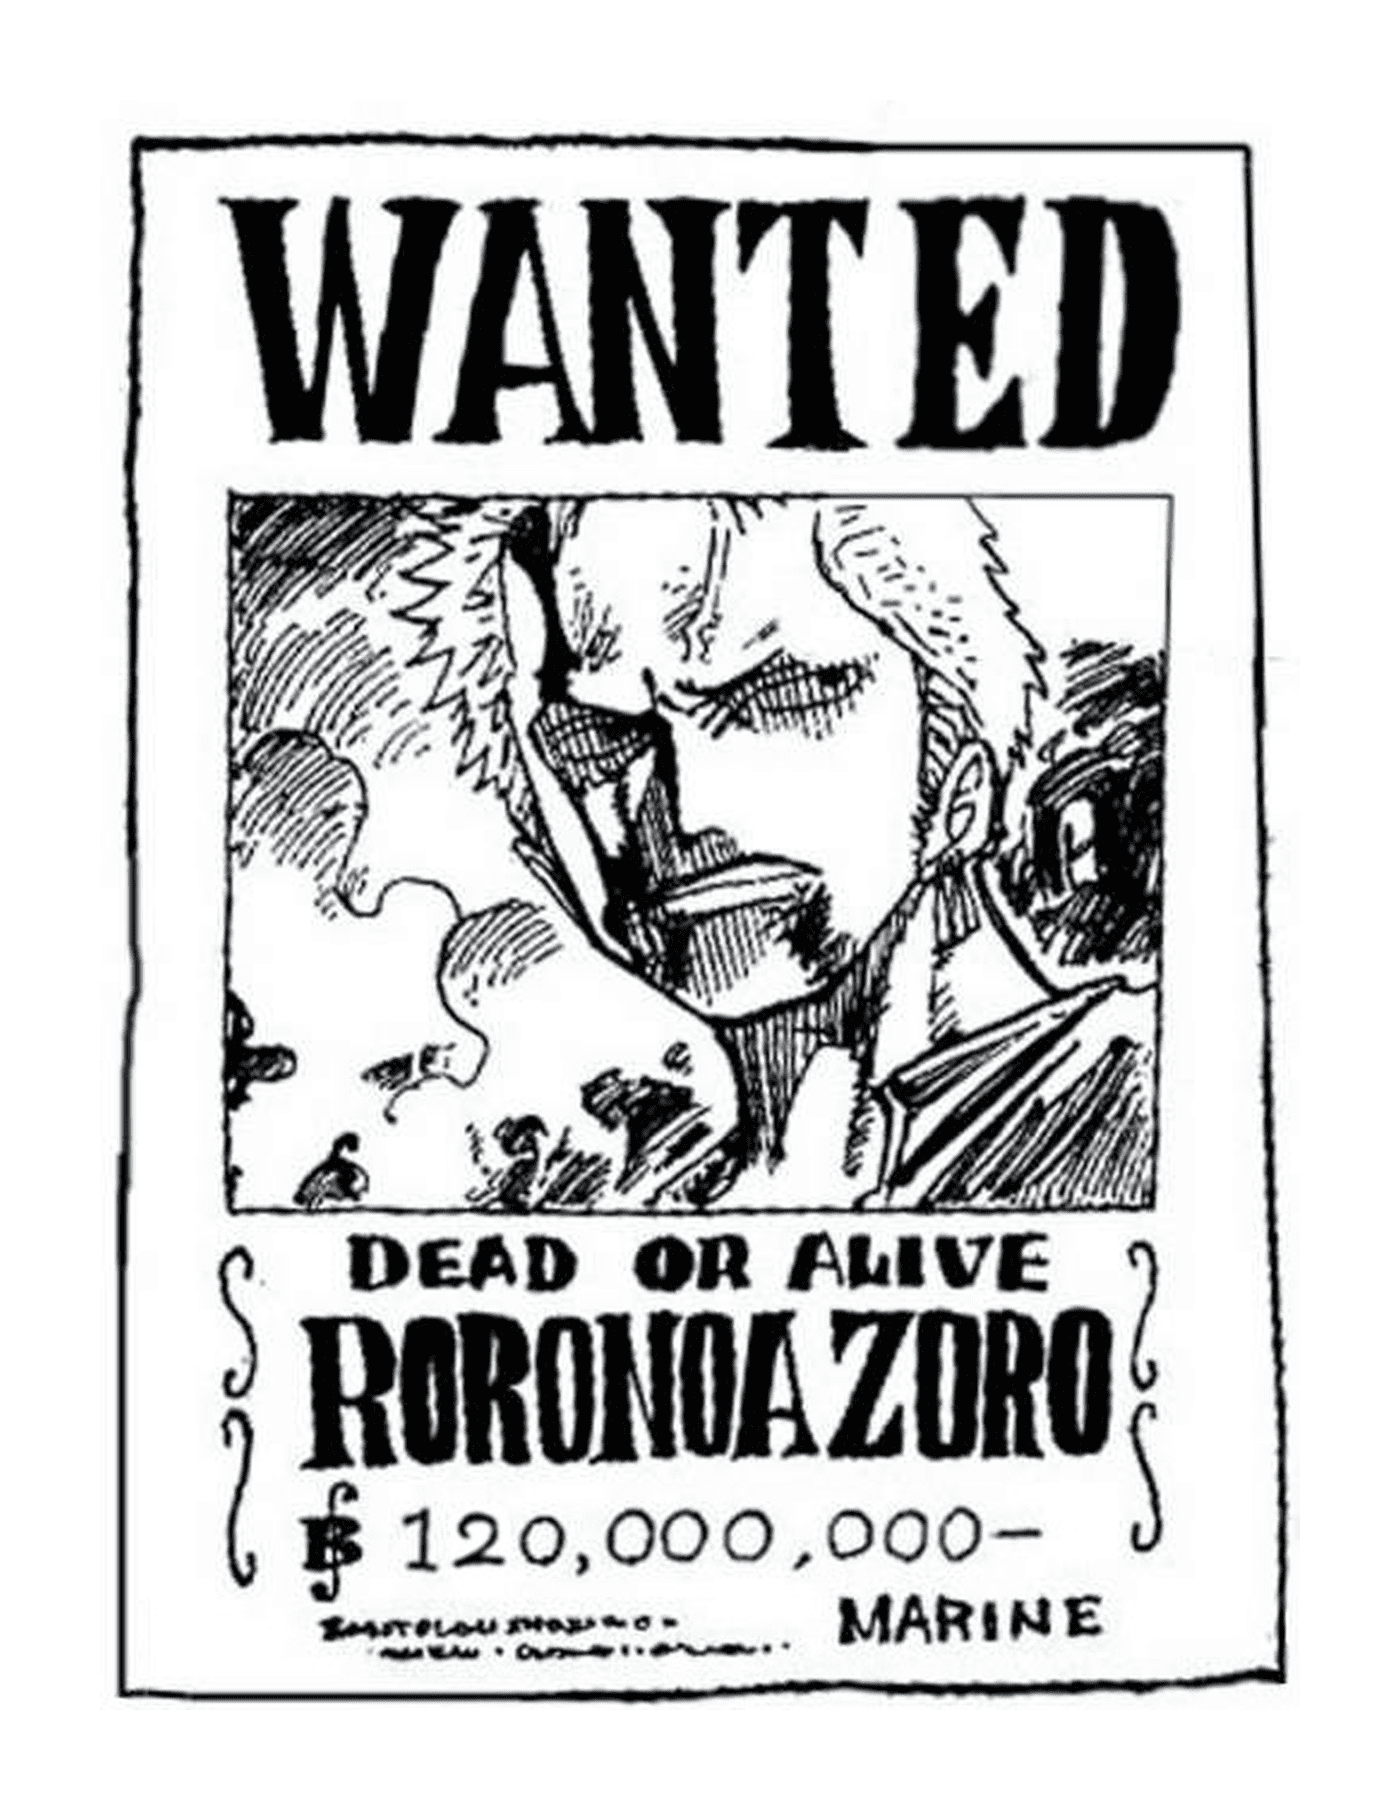  Wanted Roronoa Zoro, dead or alive 